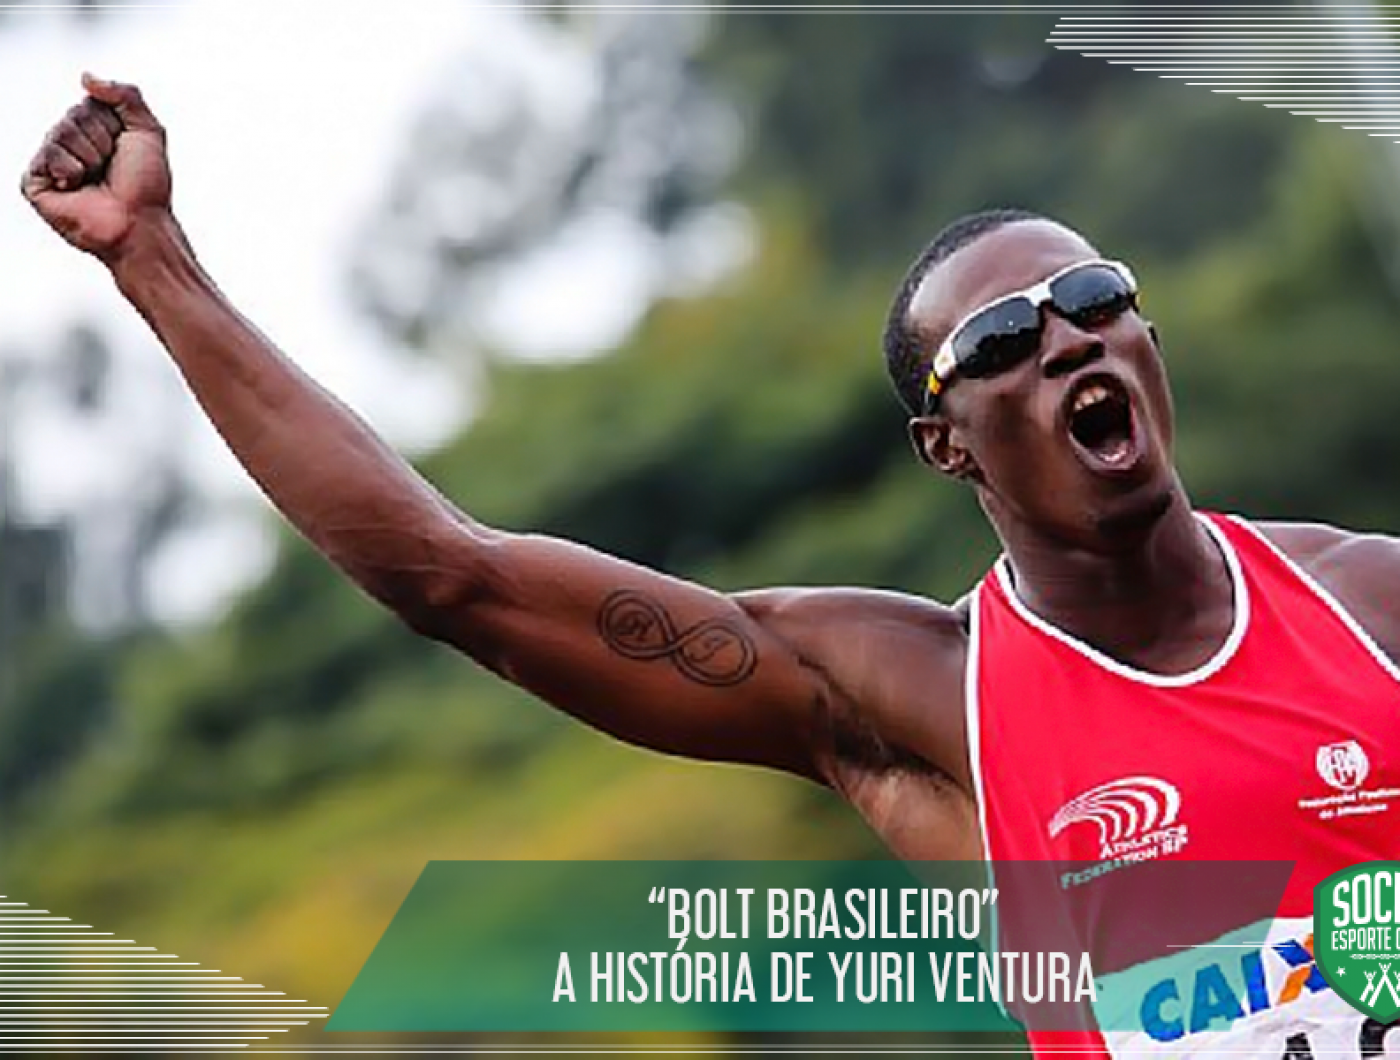 “Bolt Brasileiro”: a história de Yuri Ventura